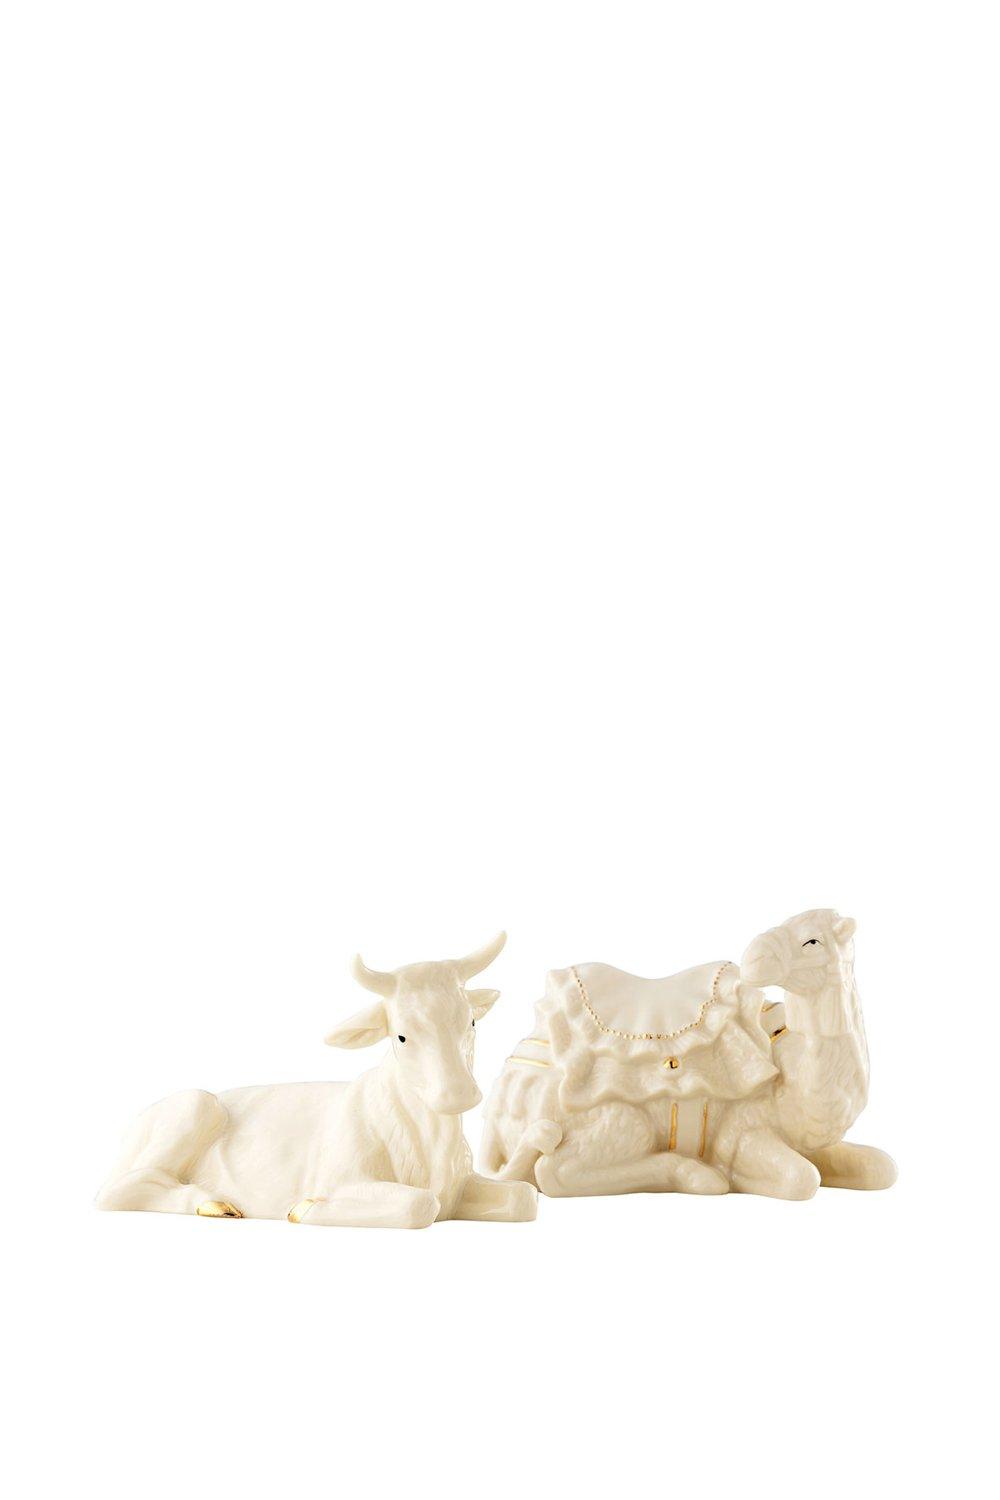 'Nativity' Manger Set (Ox & Camel)